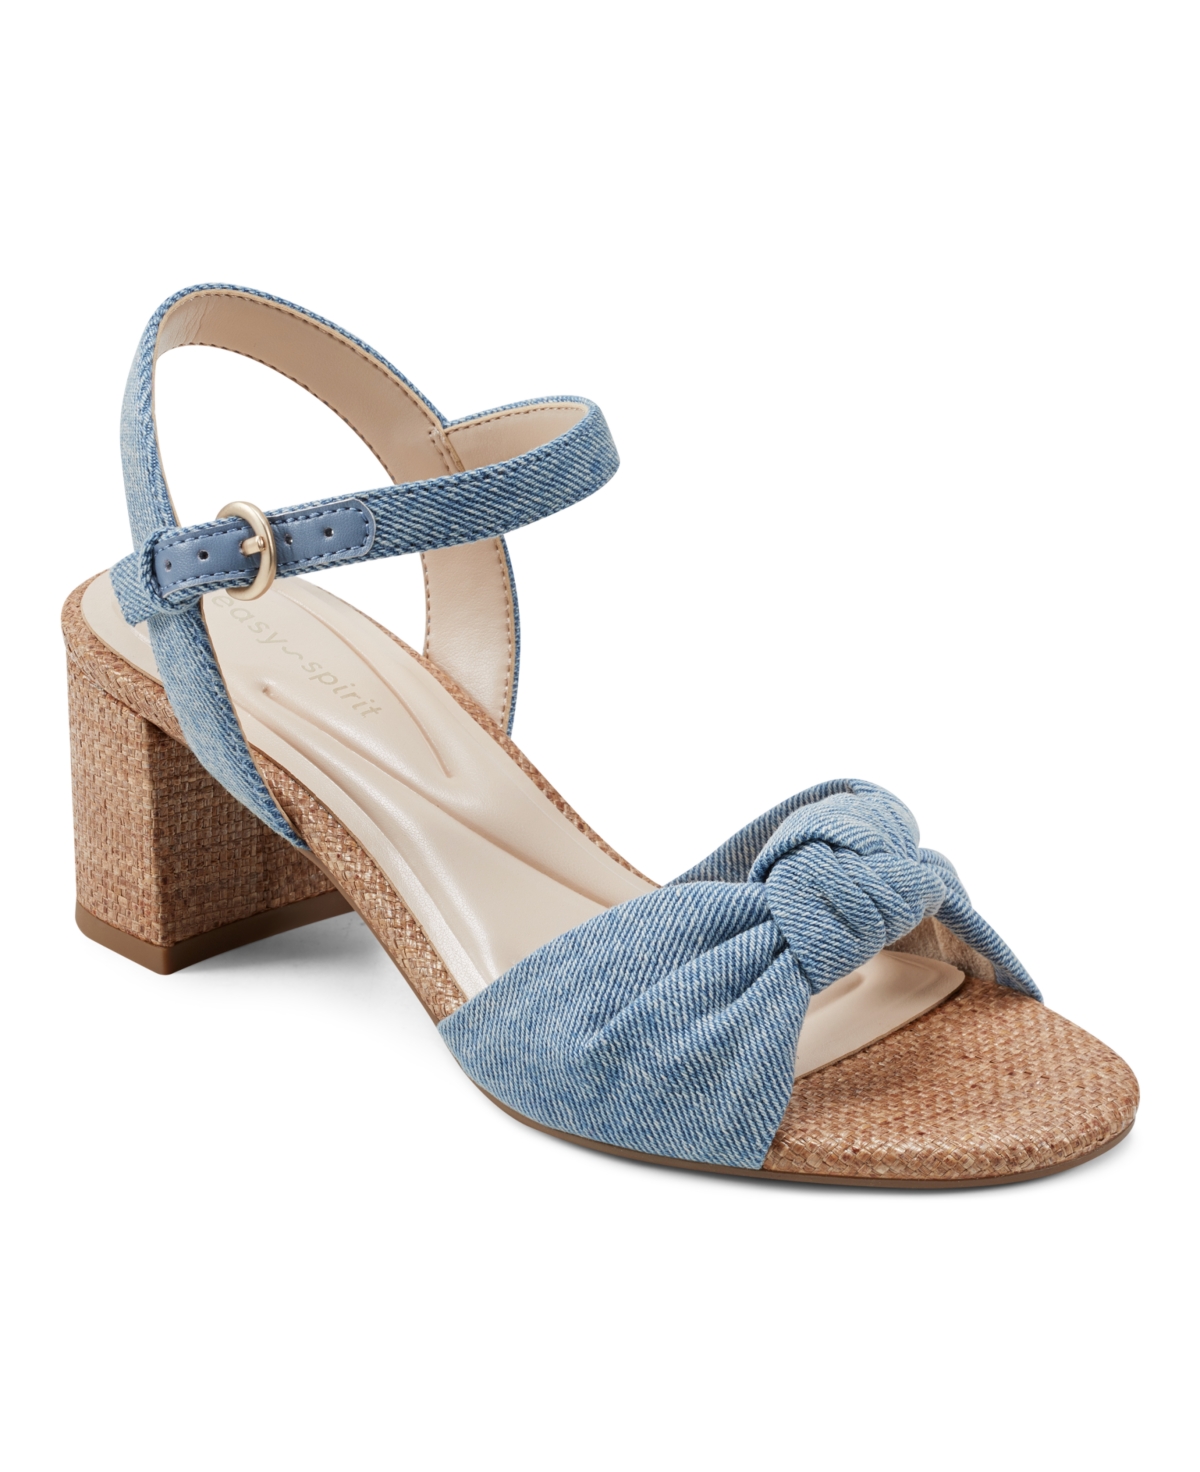 Women's Danica Block Heel Open Toe Dress Sandals - Aqua Floral Multi - Textile